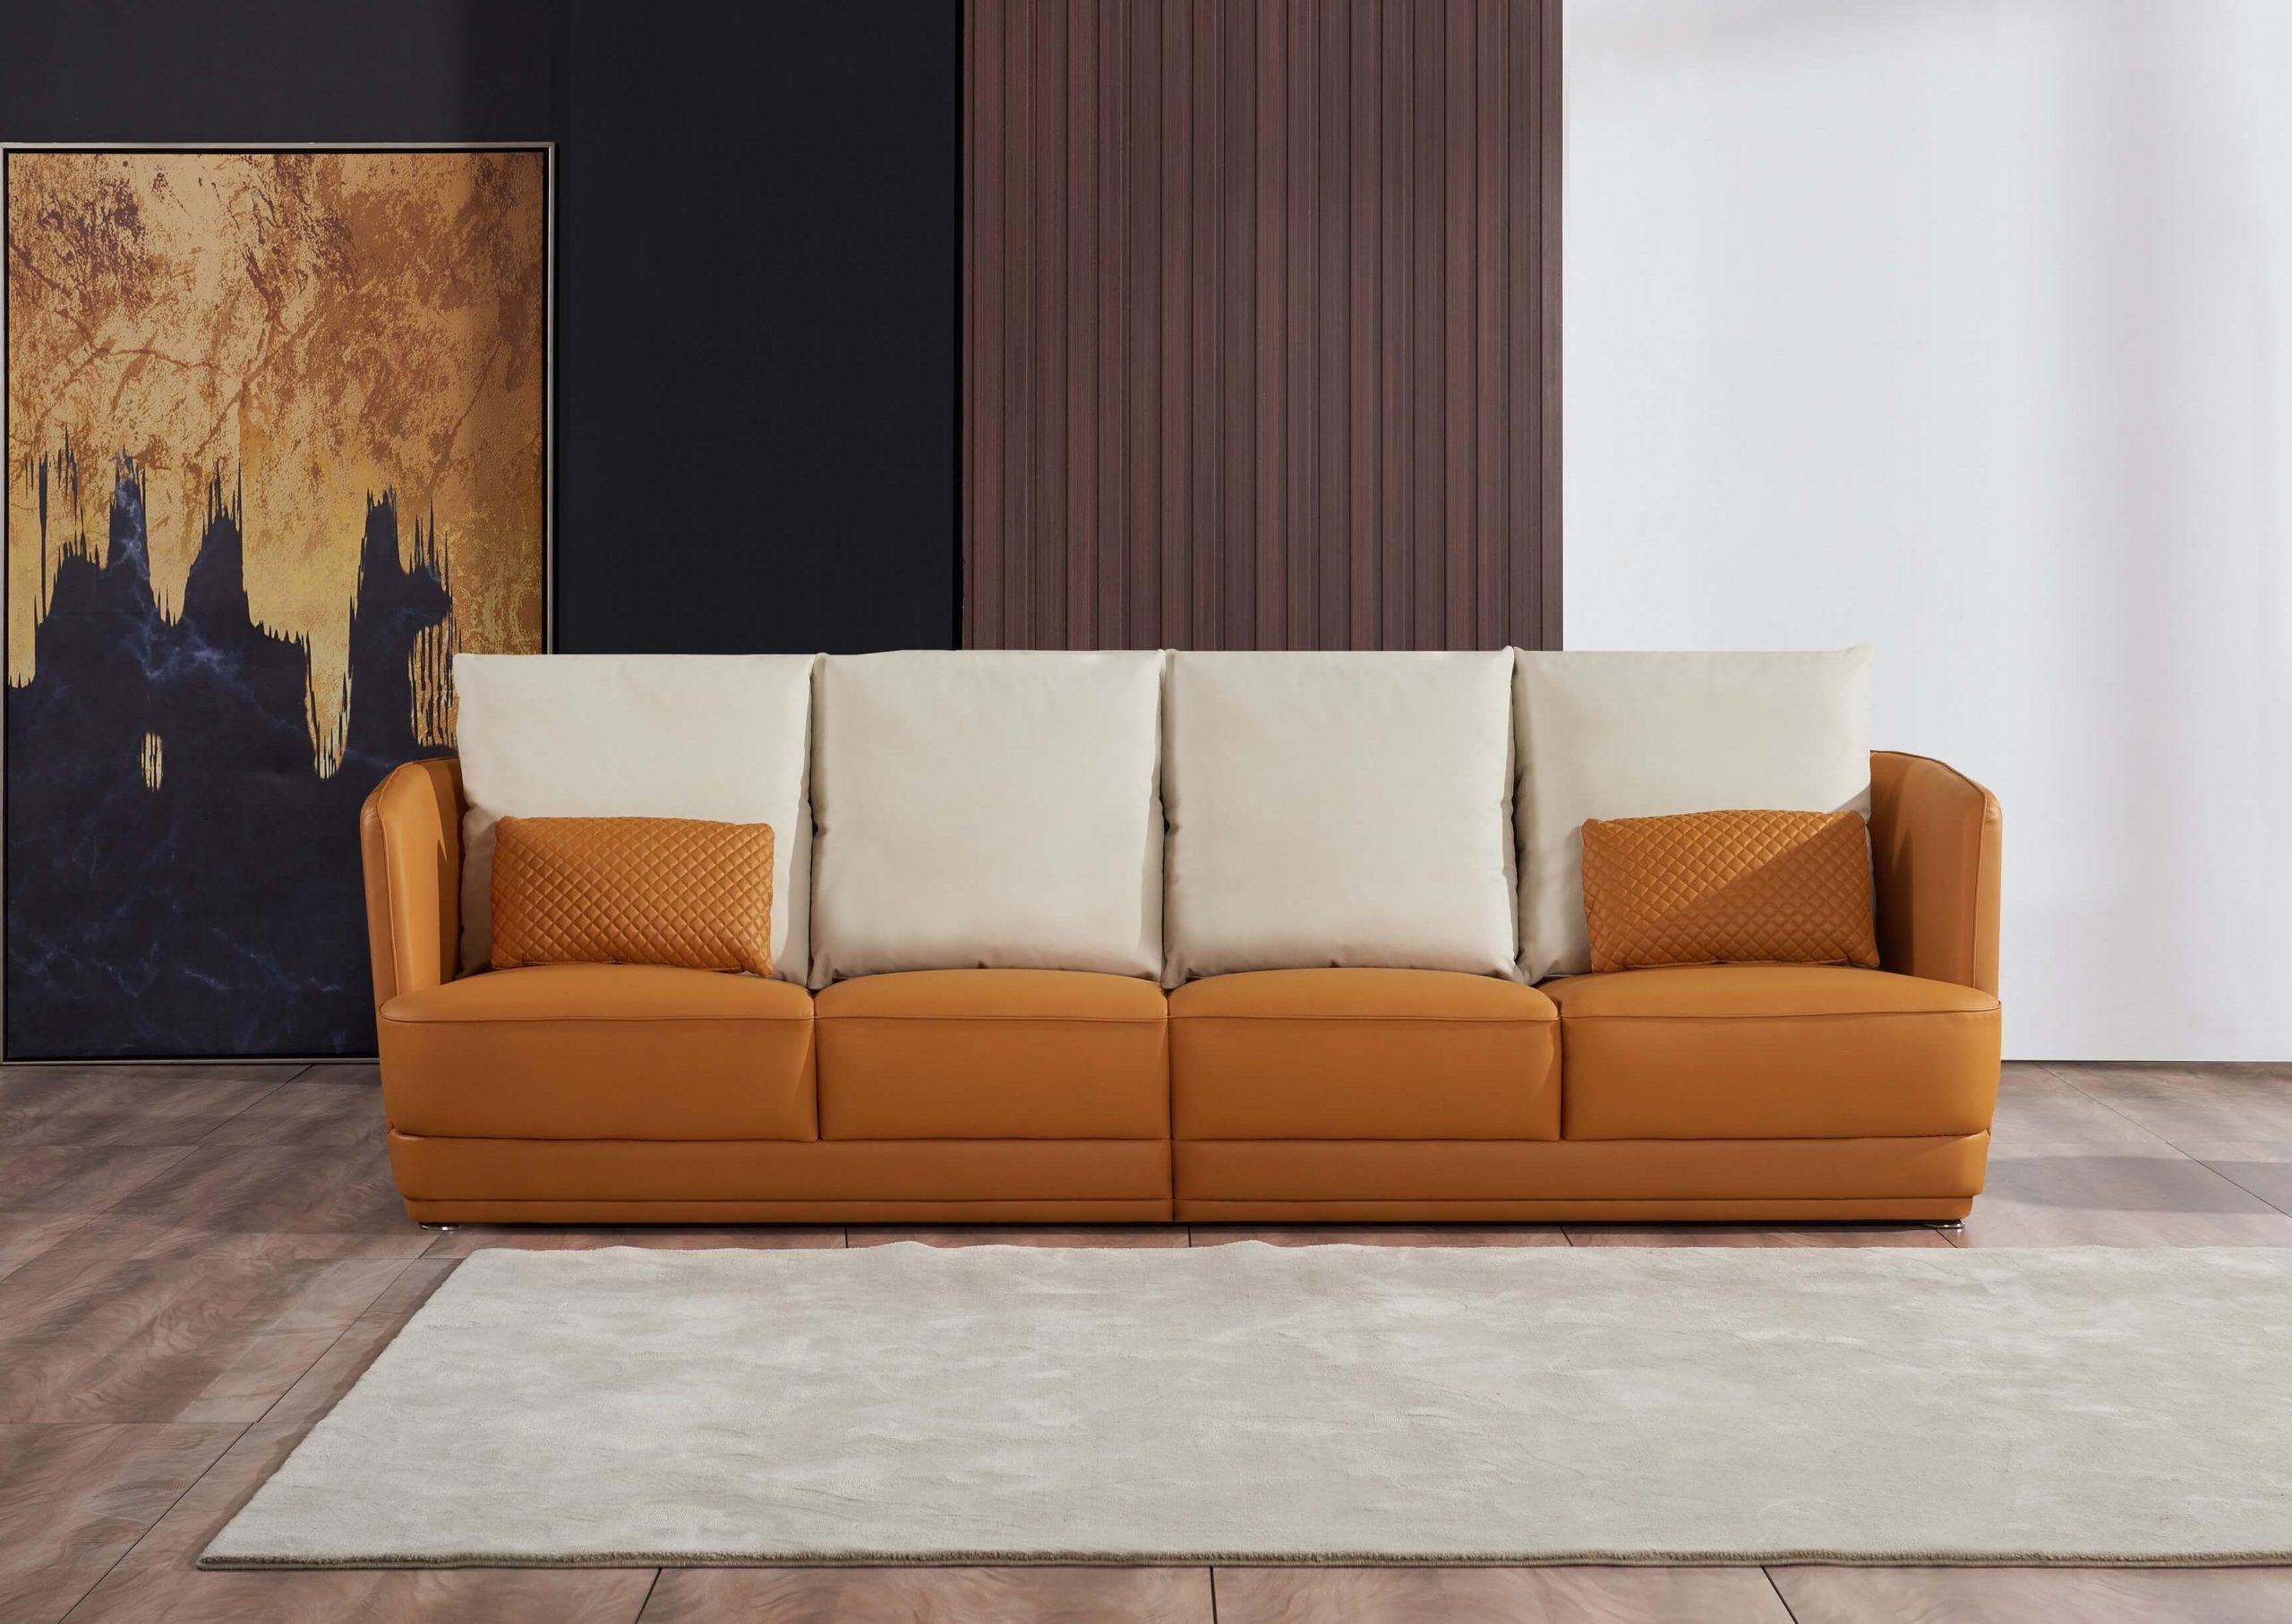 

                    
EUROPEAN FURNITURE GLAMOUR 4 Seater Sofa Orange/Brown Italian Leather Purchase 
